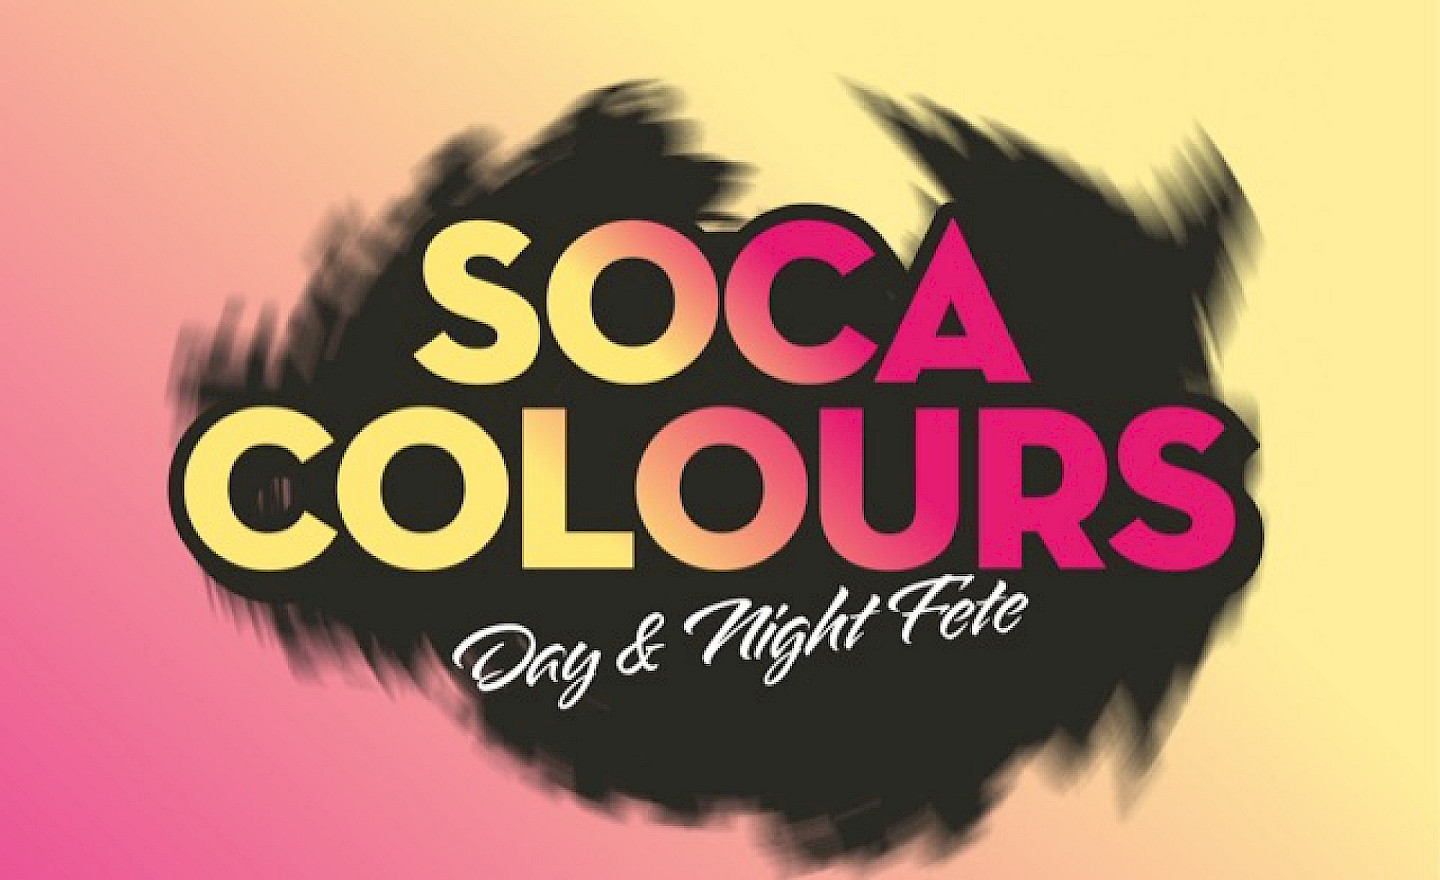 Soca Colours